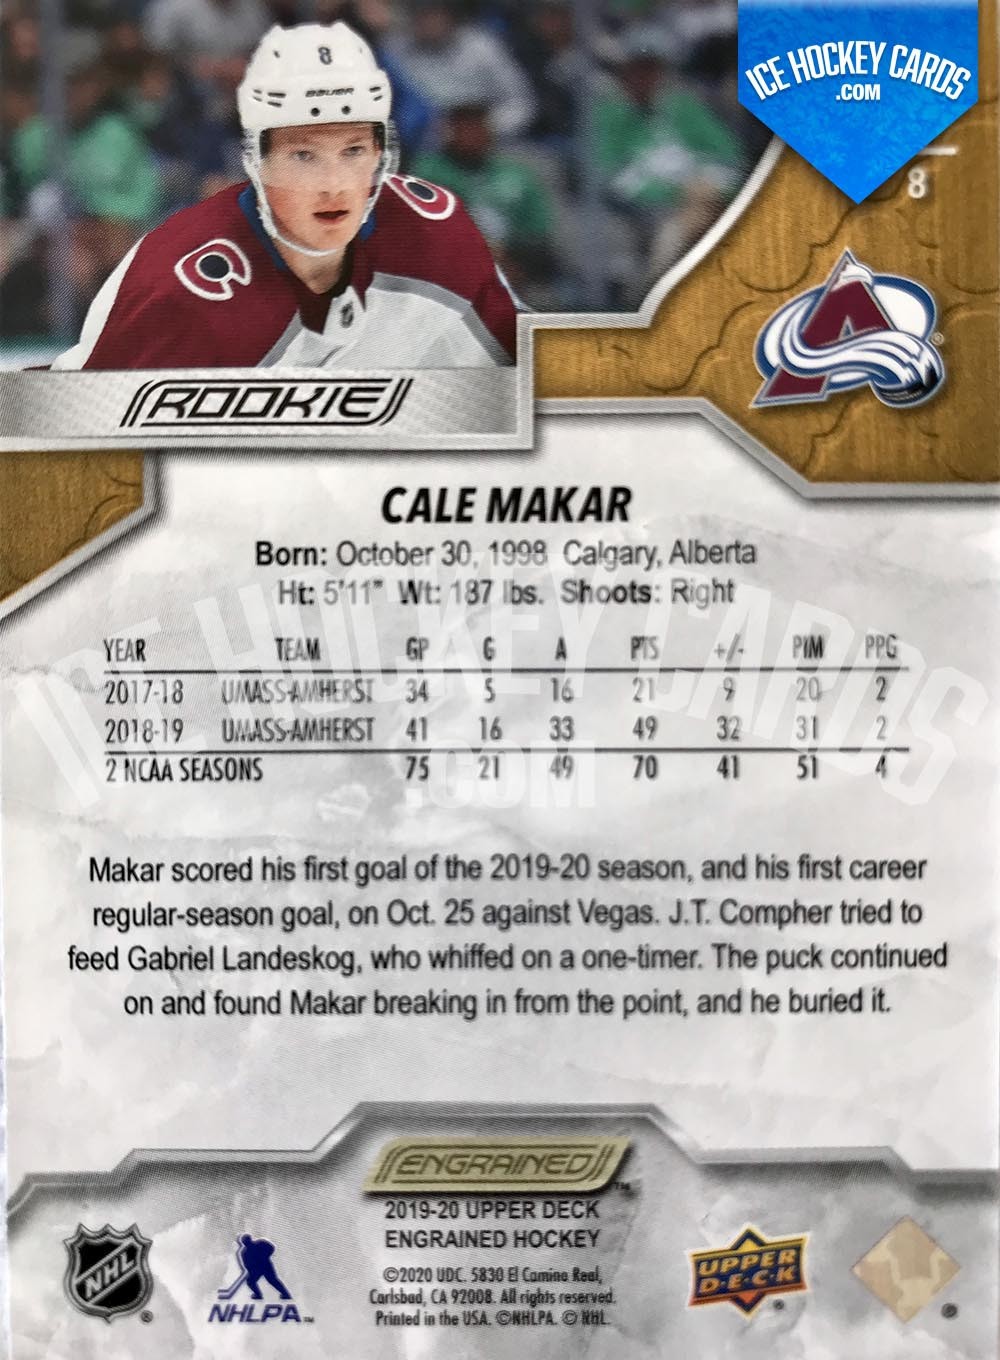 Upper Deck - Engrained 2019-20 - Cale Makar Base Rookie Card back